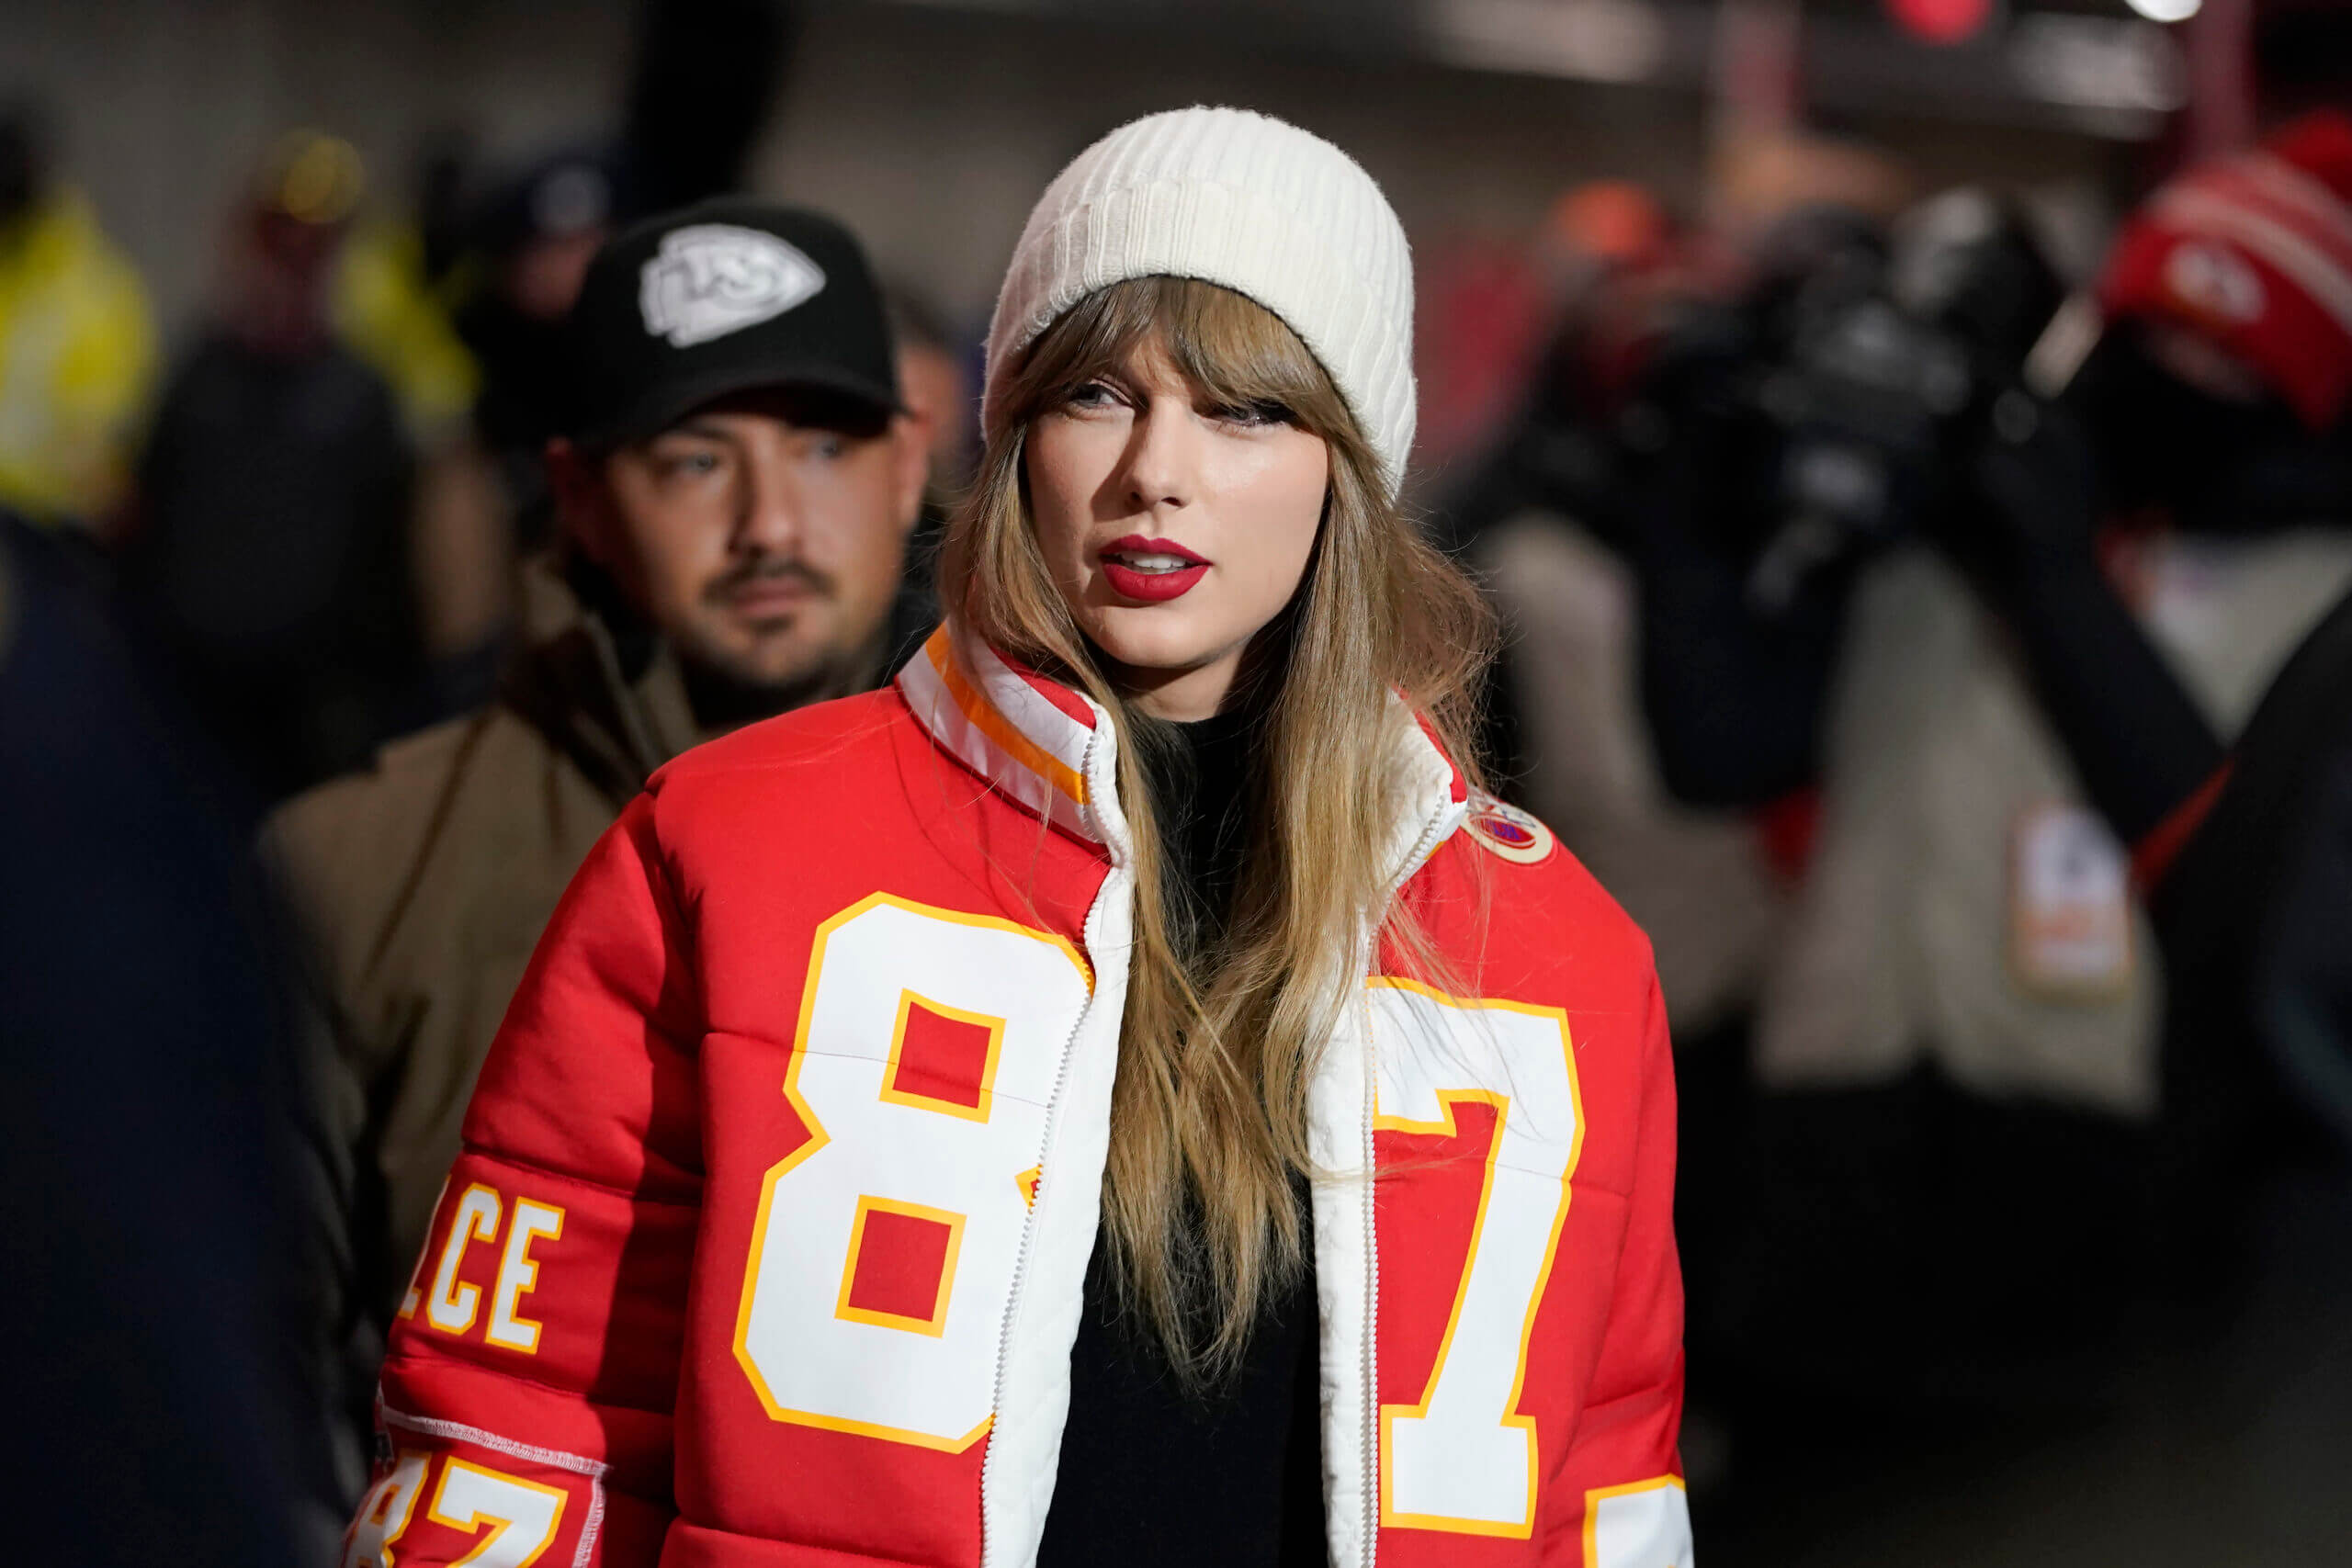 Kristin Juszczyk Secures NFL Licensing Deal After Taylor Swift Jacket Goes Viral